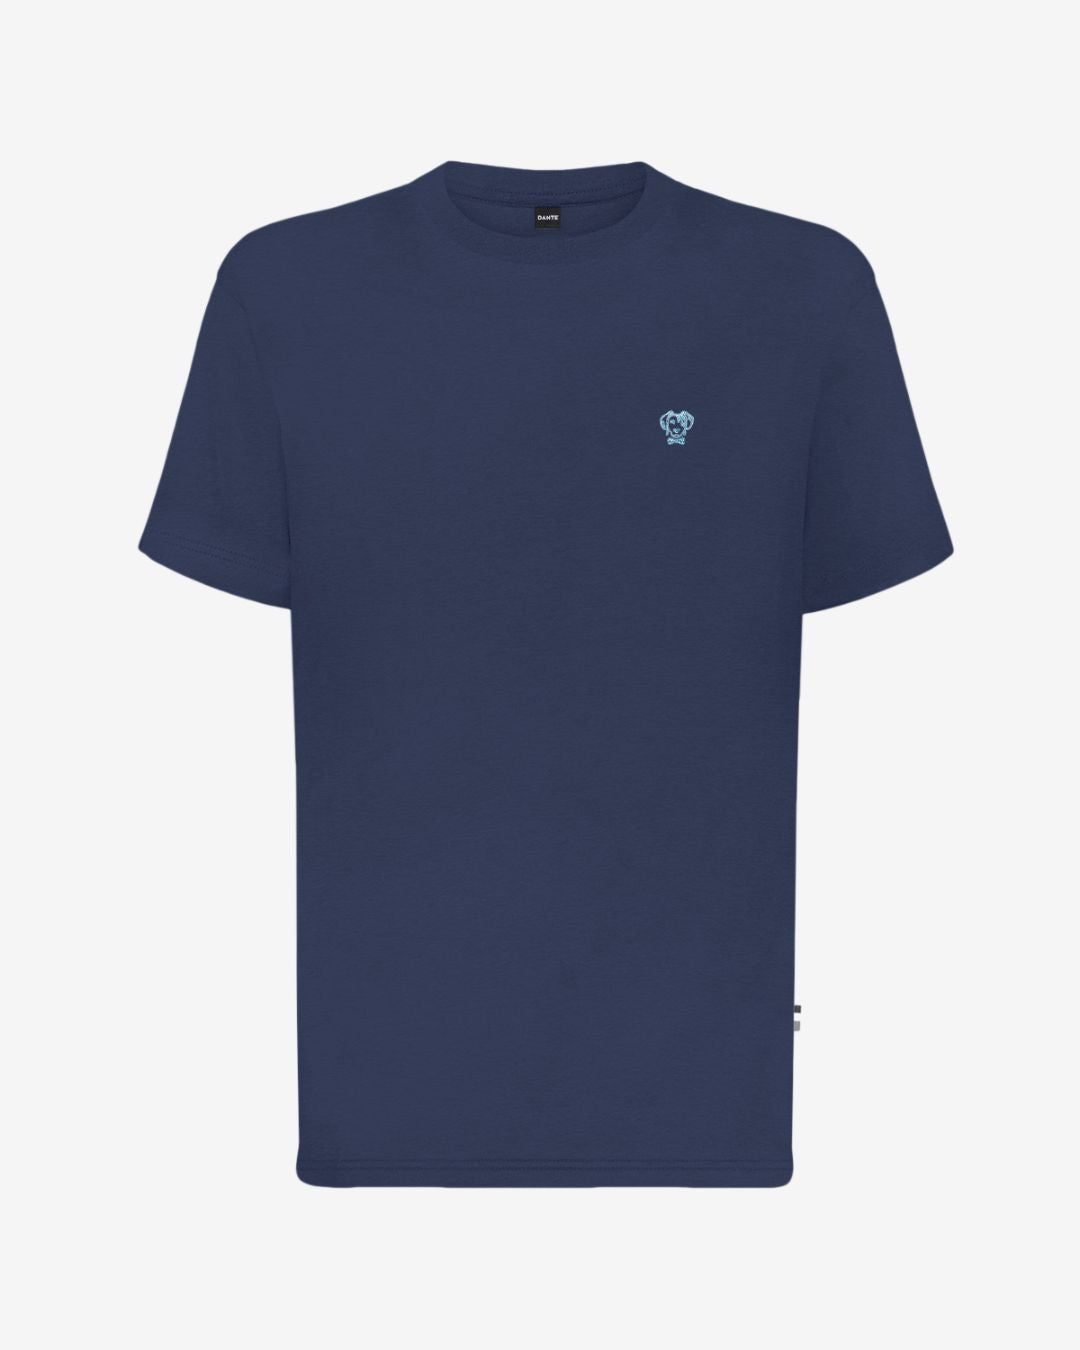 Camiseta Antimanchas Azul Navy - Talla Regular